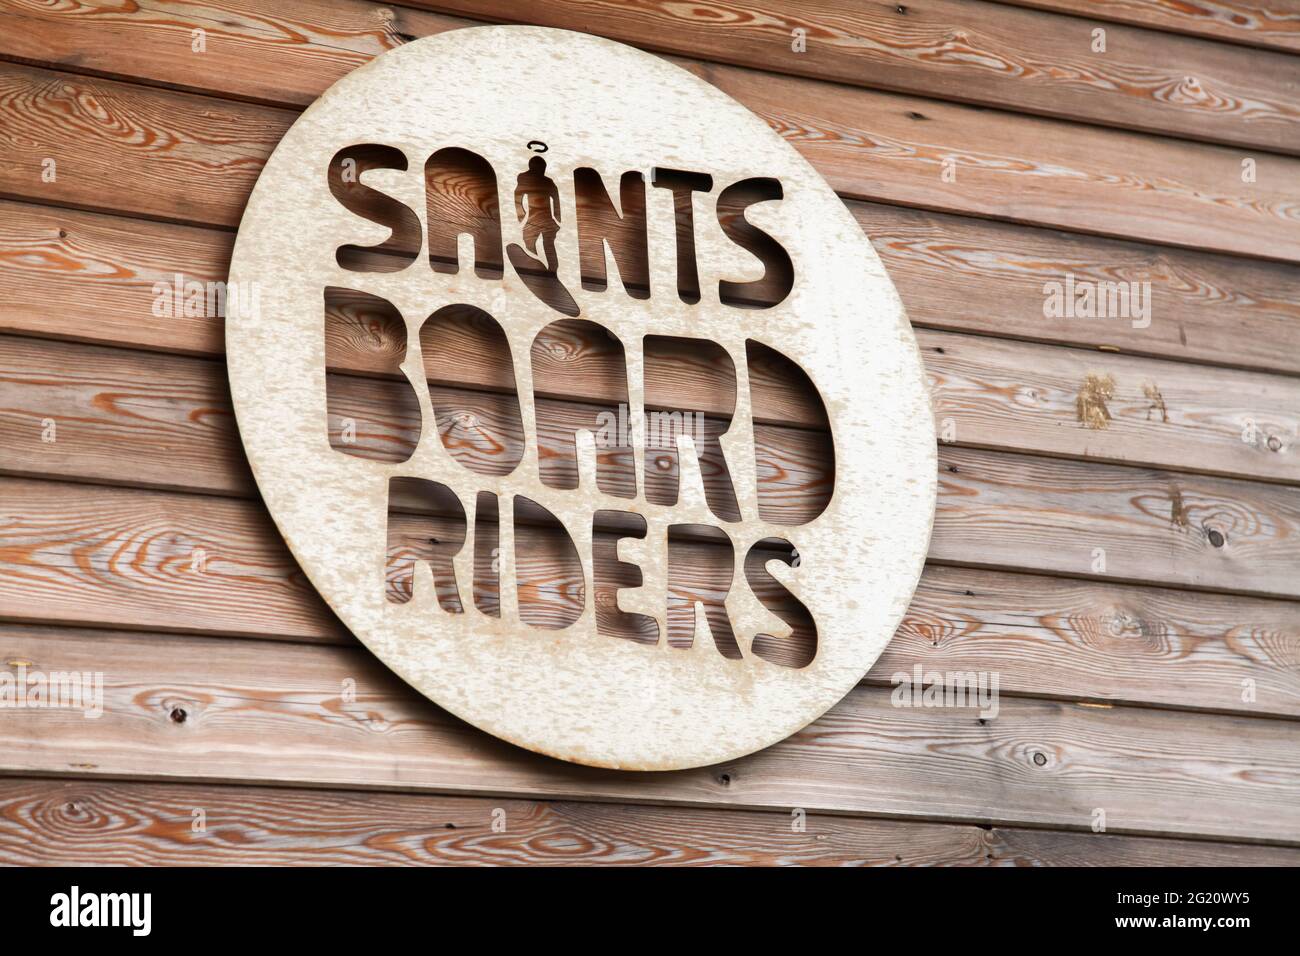 Saints Board Riders sign, Porthmeor beach, St. Ives, Cornwall, UK, May 2021 Stock Photo